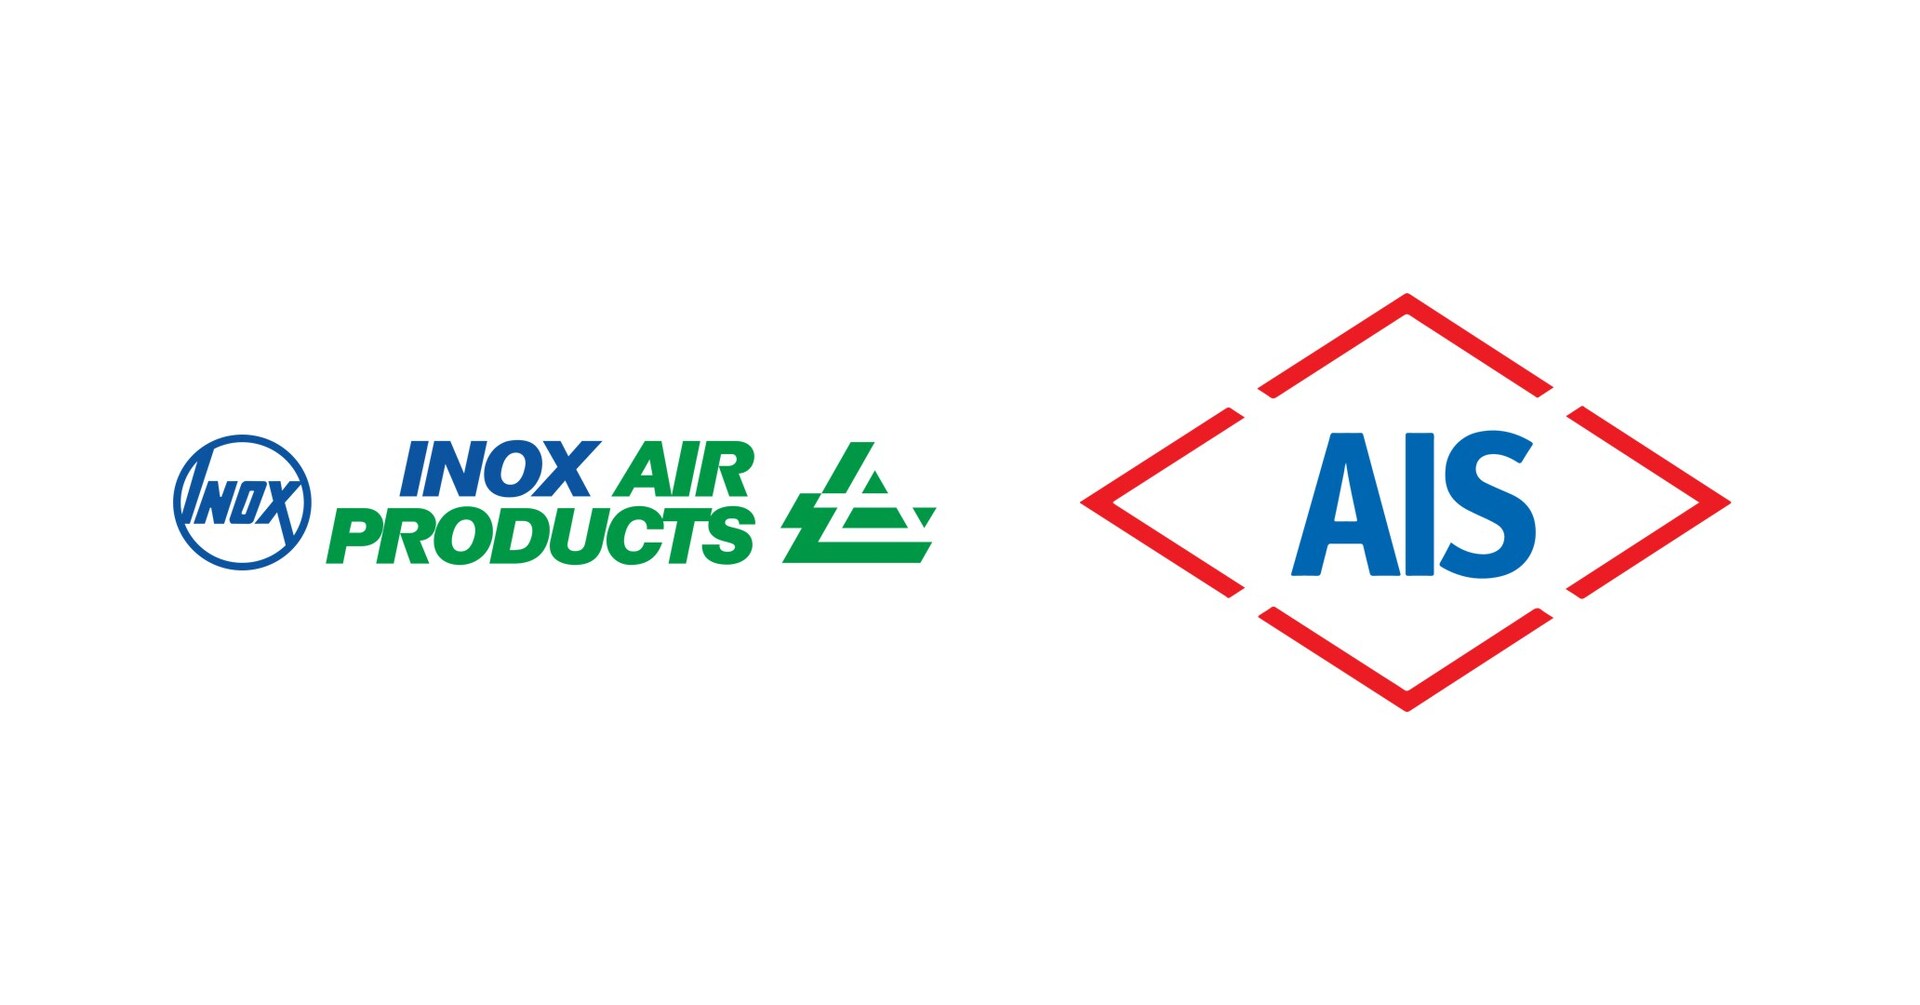 Asahi India Glass和INOX Air Products公司是一家致力于绿色消费的公司